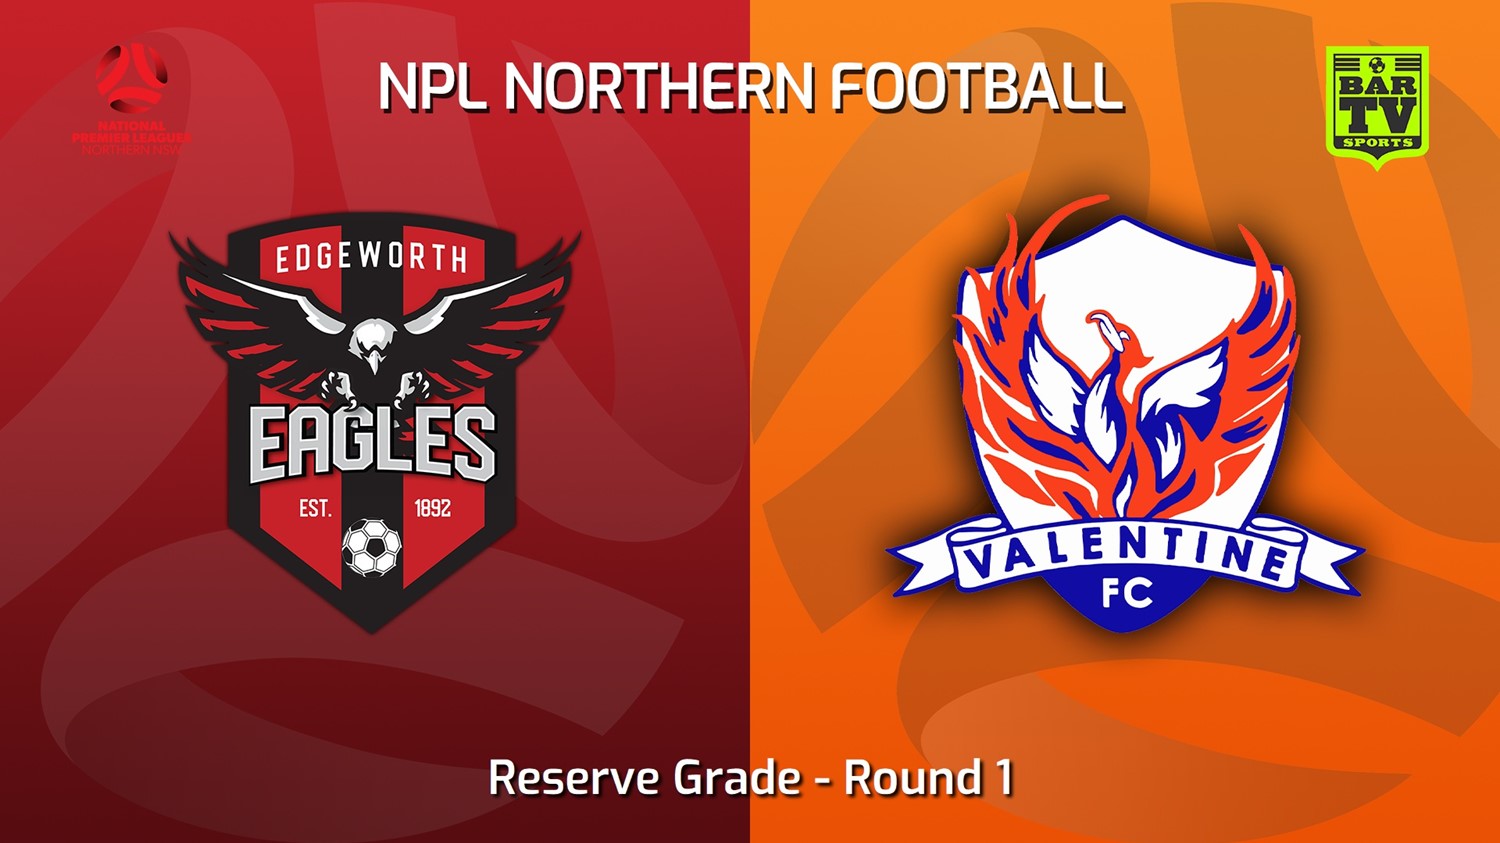 220907-NNSW NPLM Res Round 1 - Edgeworth Eagles Res v Valentine Phoenix FC Res Minigame Slate Image